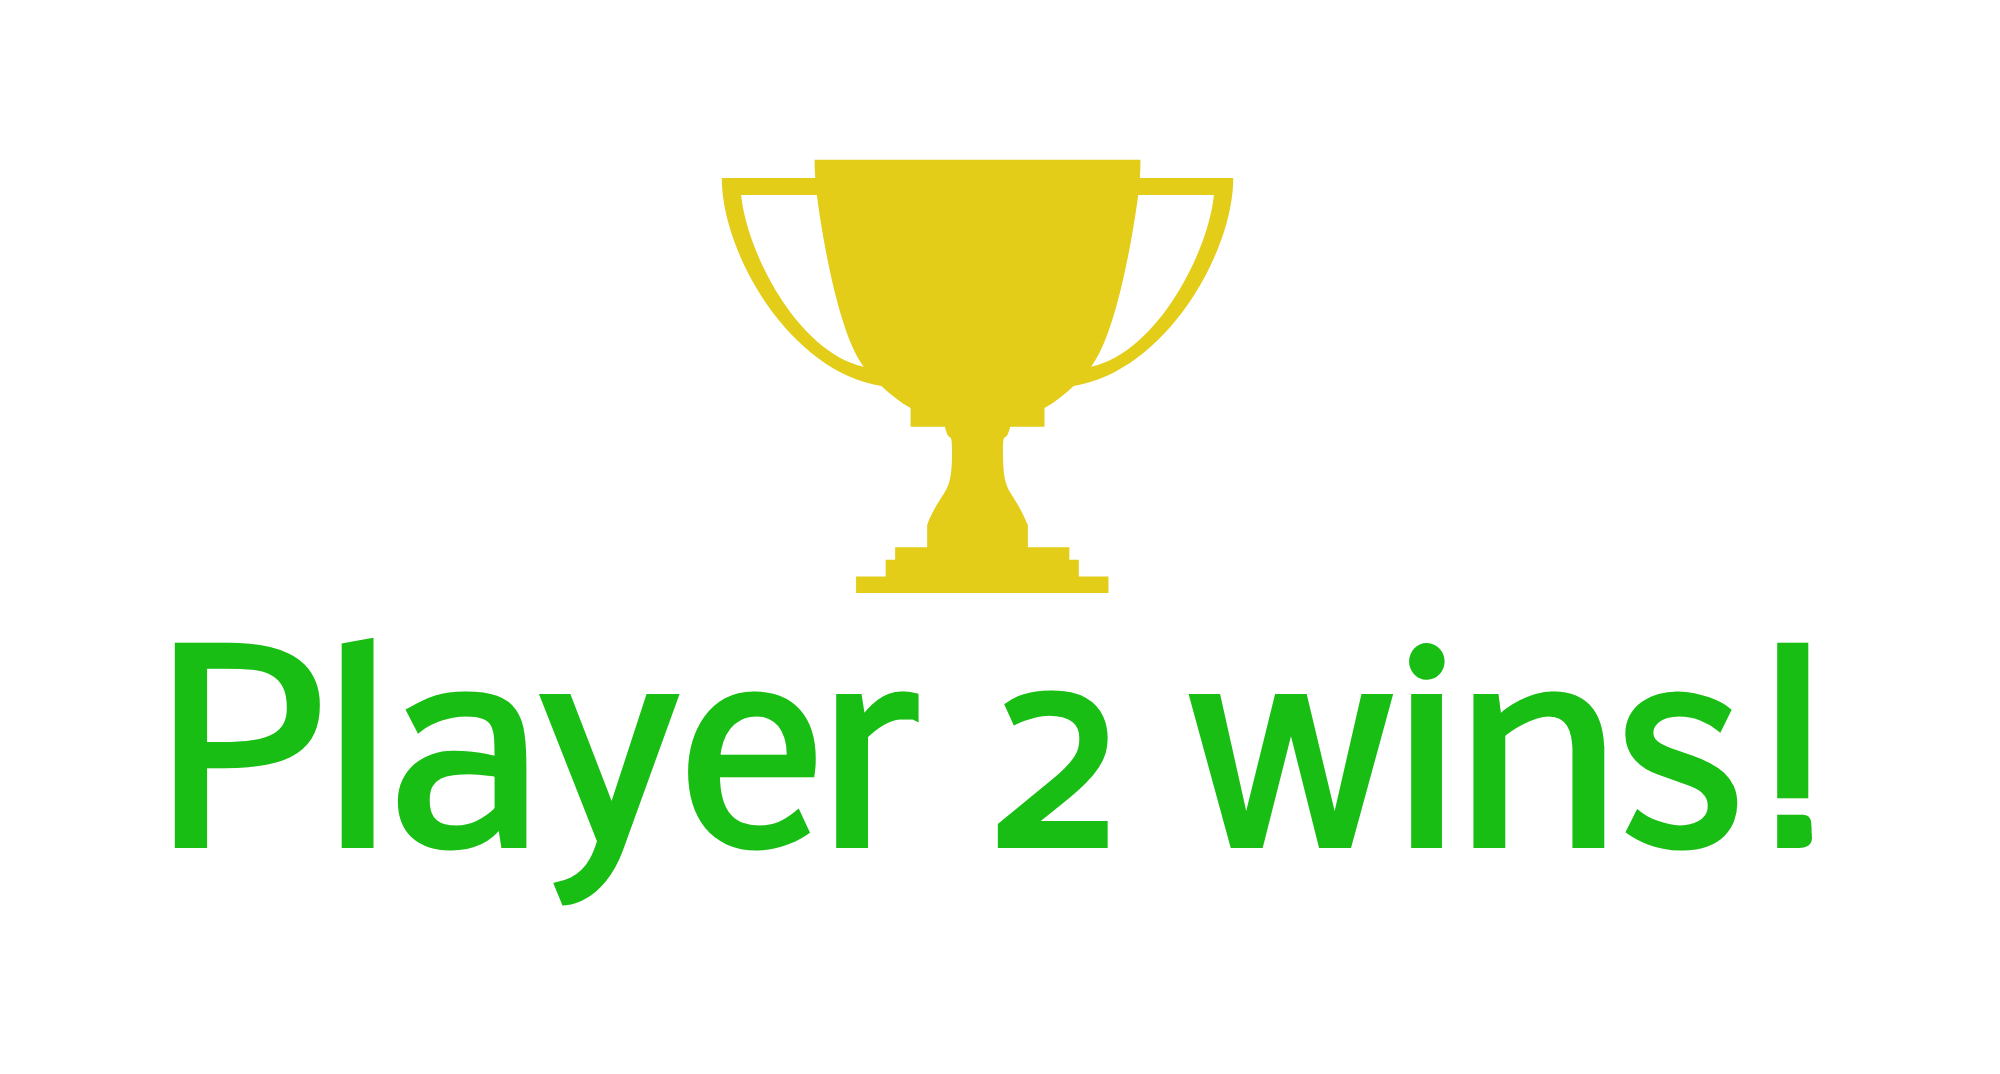 Player 2 wins!